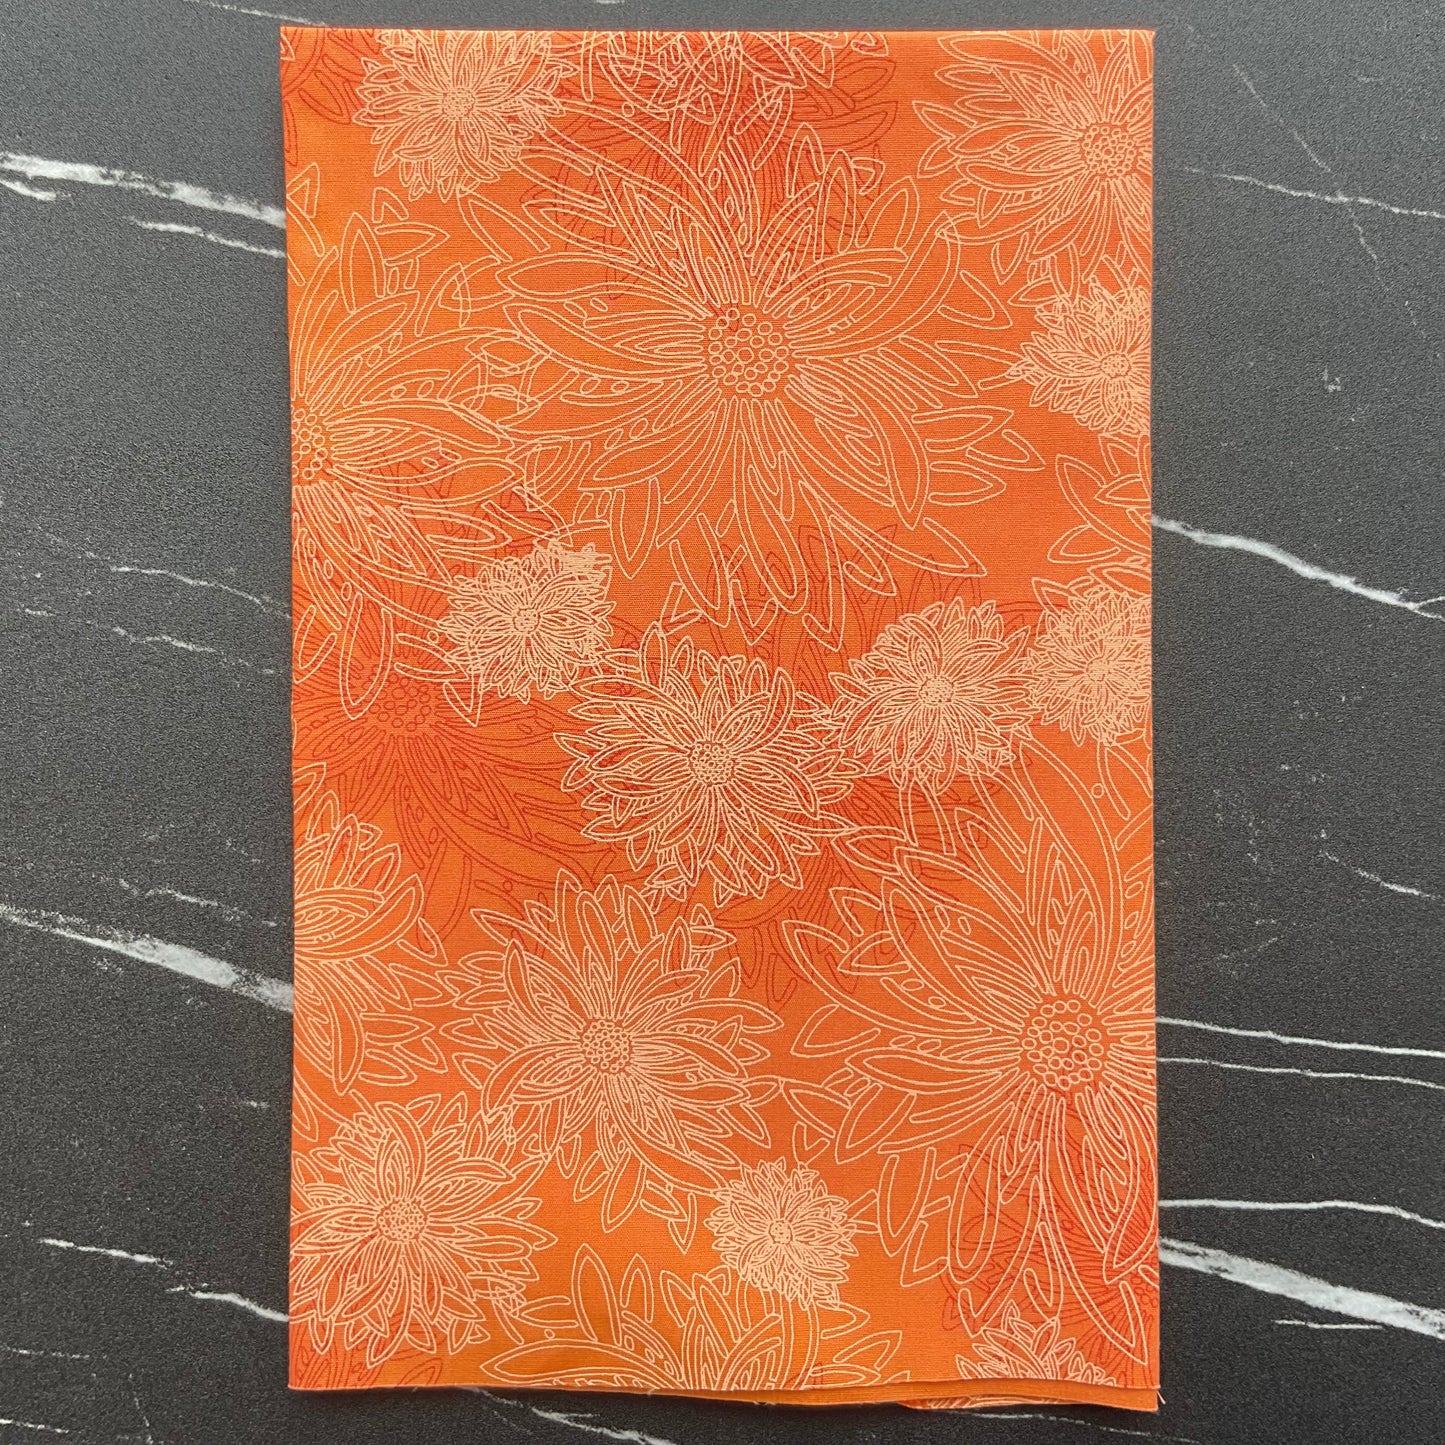 Floral Elements - FE-525-Tangerine